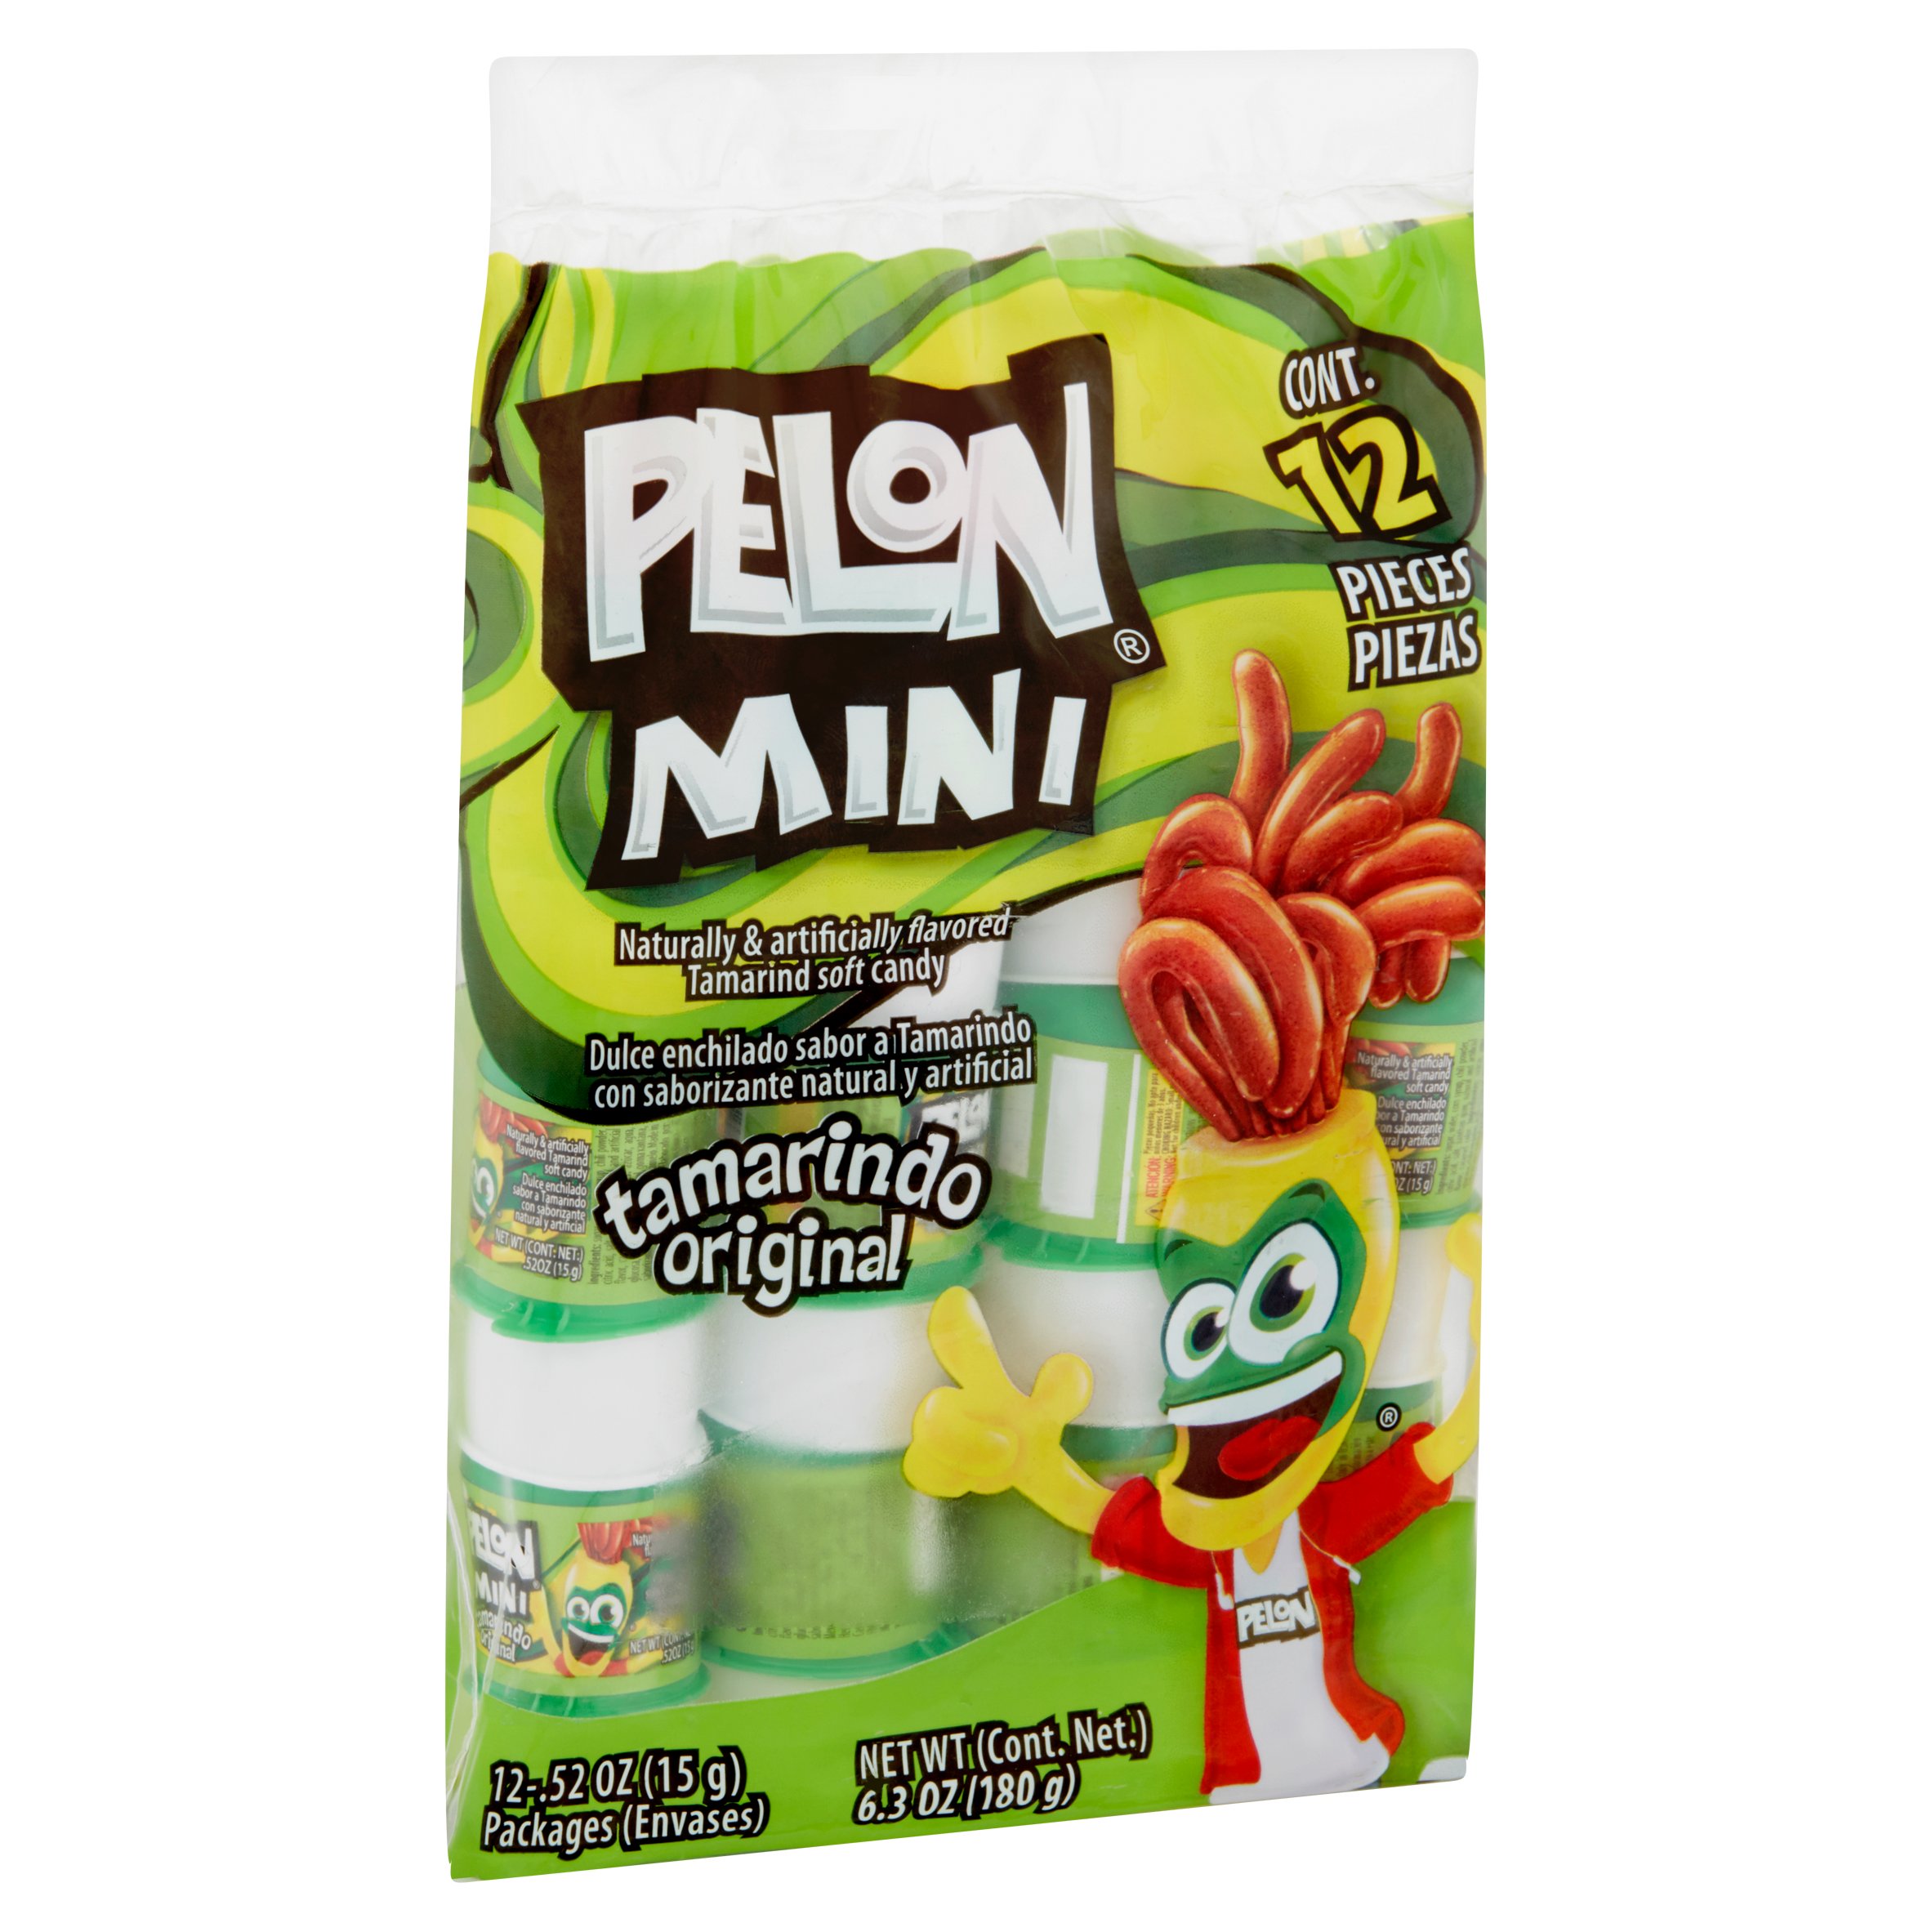 Pelon, Mini Original Tamarindo Candy, 0.52 Oz, 12 Ct - image 2 of 5